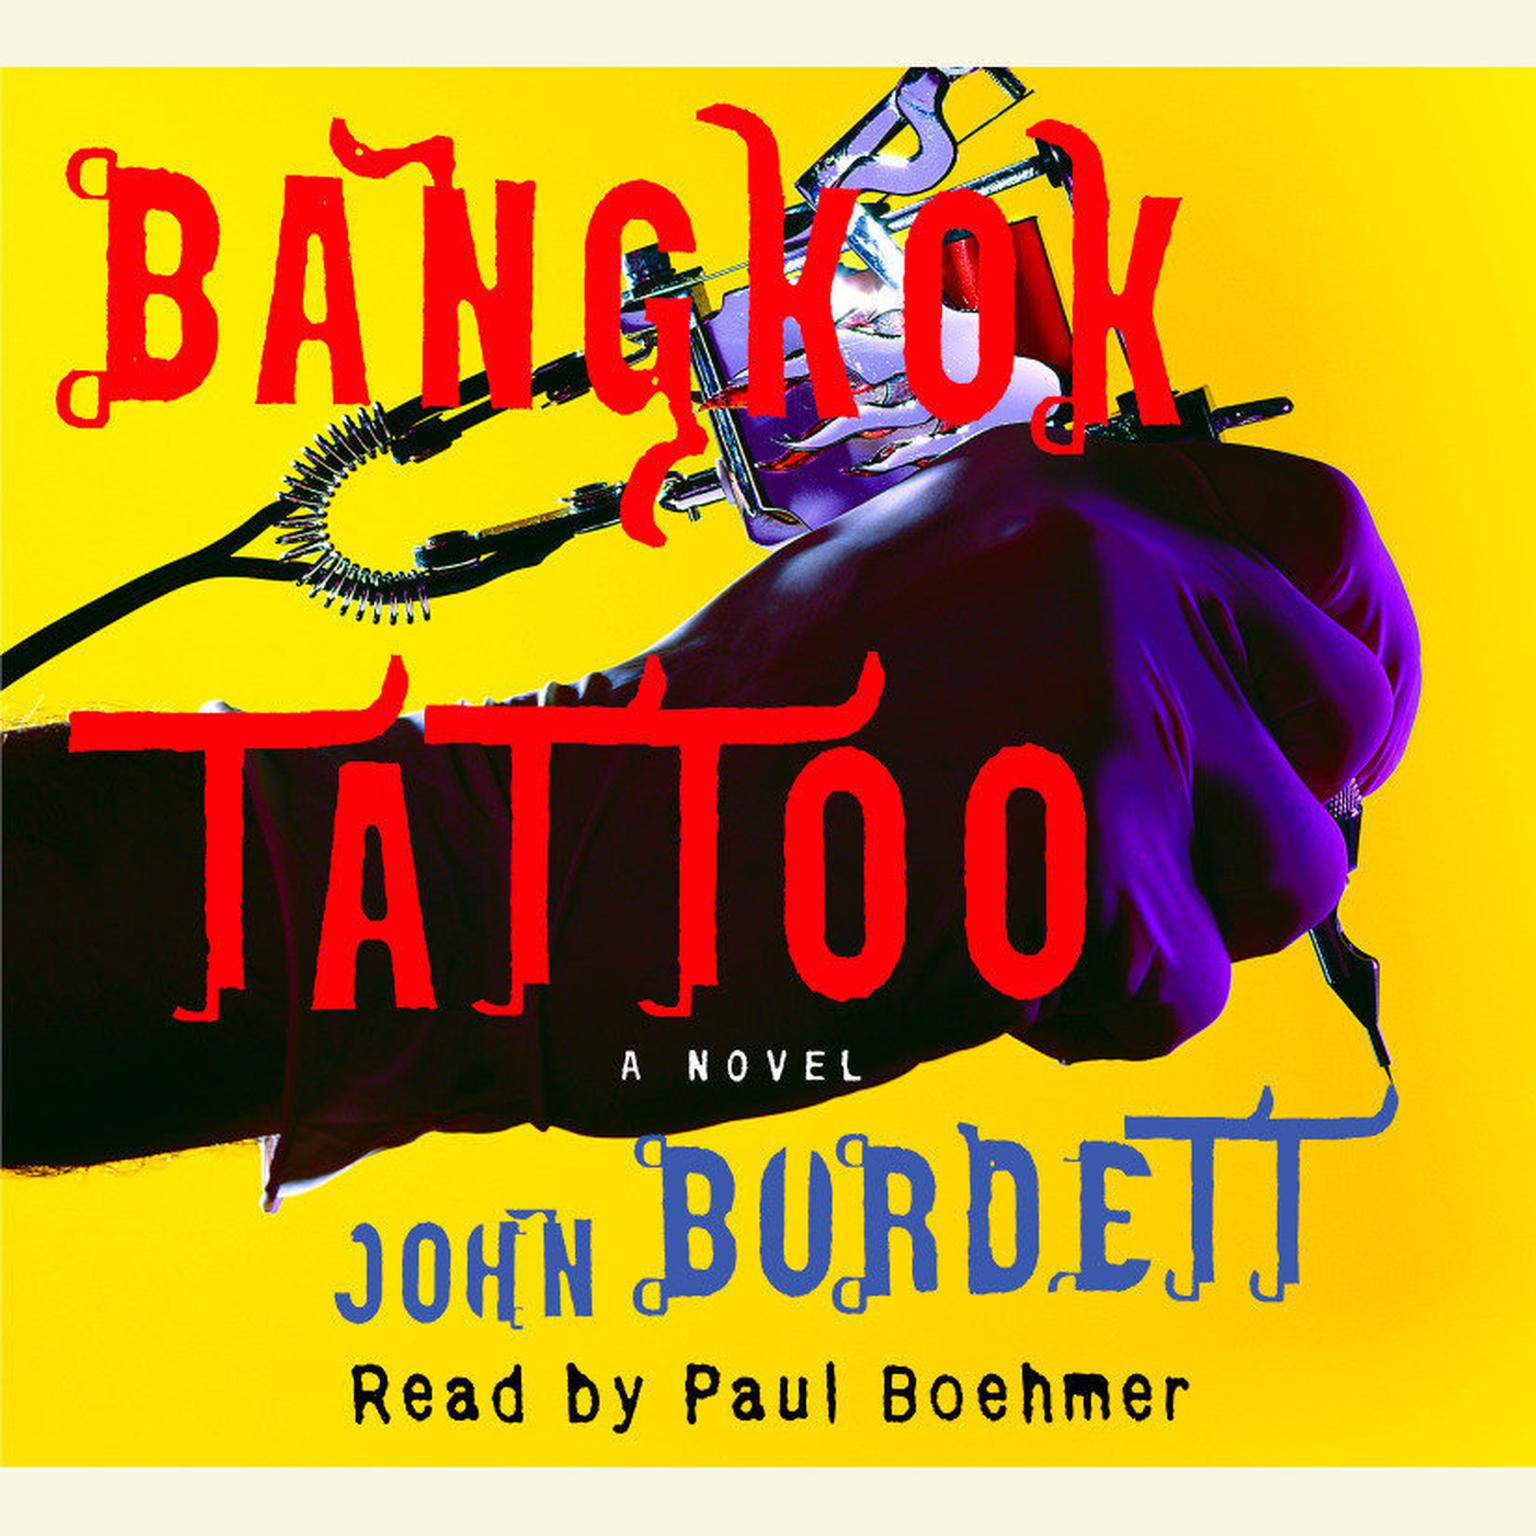 Bangkok Tattoo (Abridged) Audiobook, by John Burdett